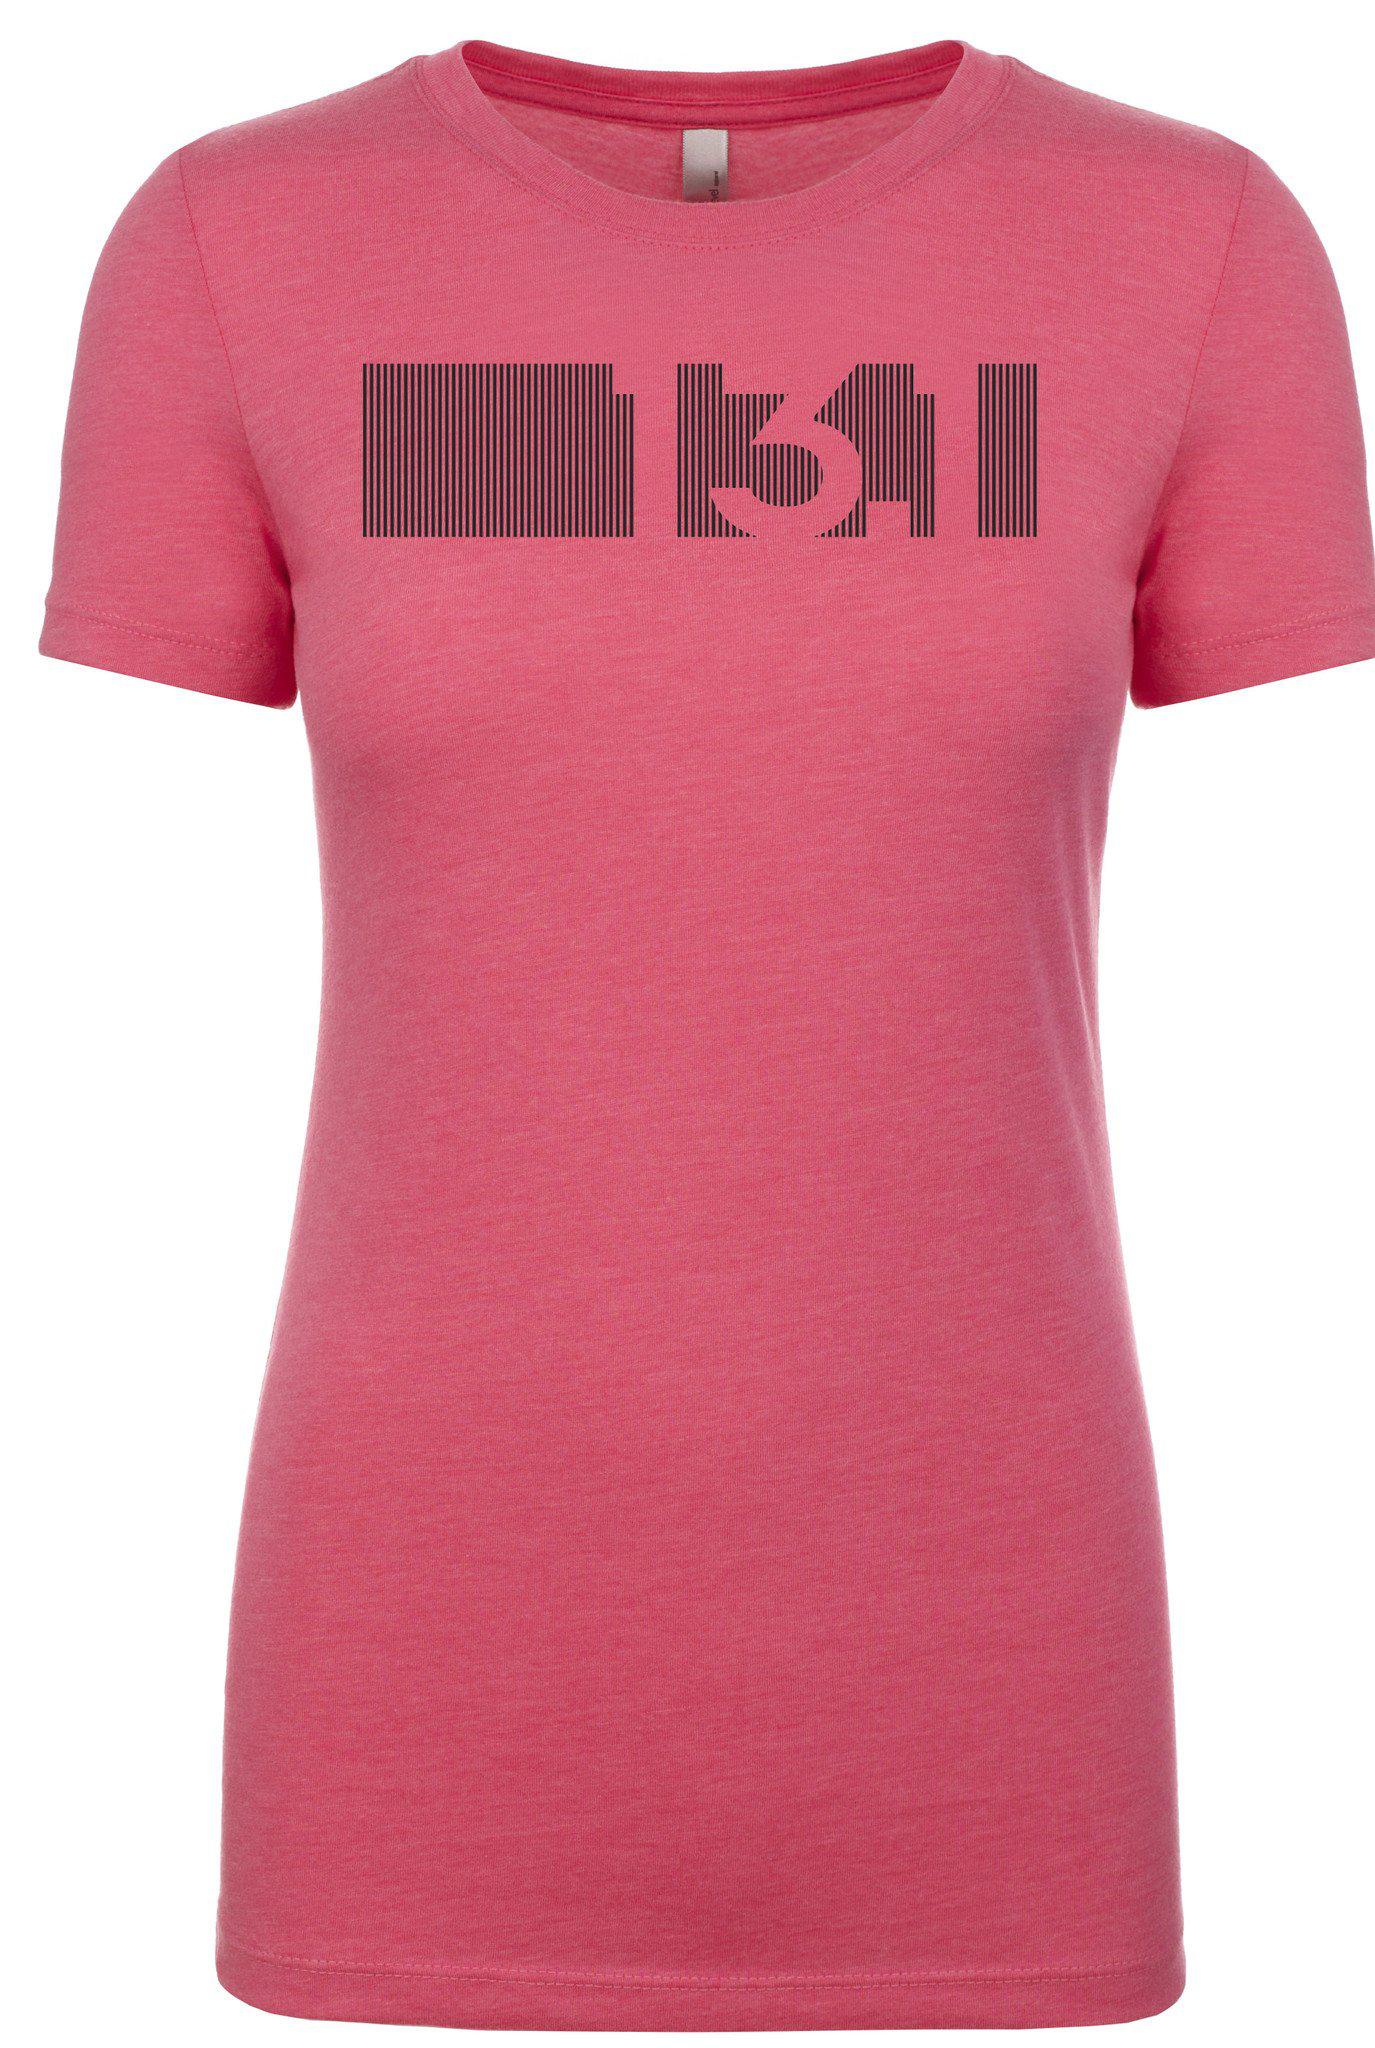 Woman's short sleeve running tshirt "13.1 barcode" by Endurance Apparel